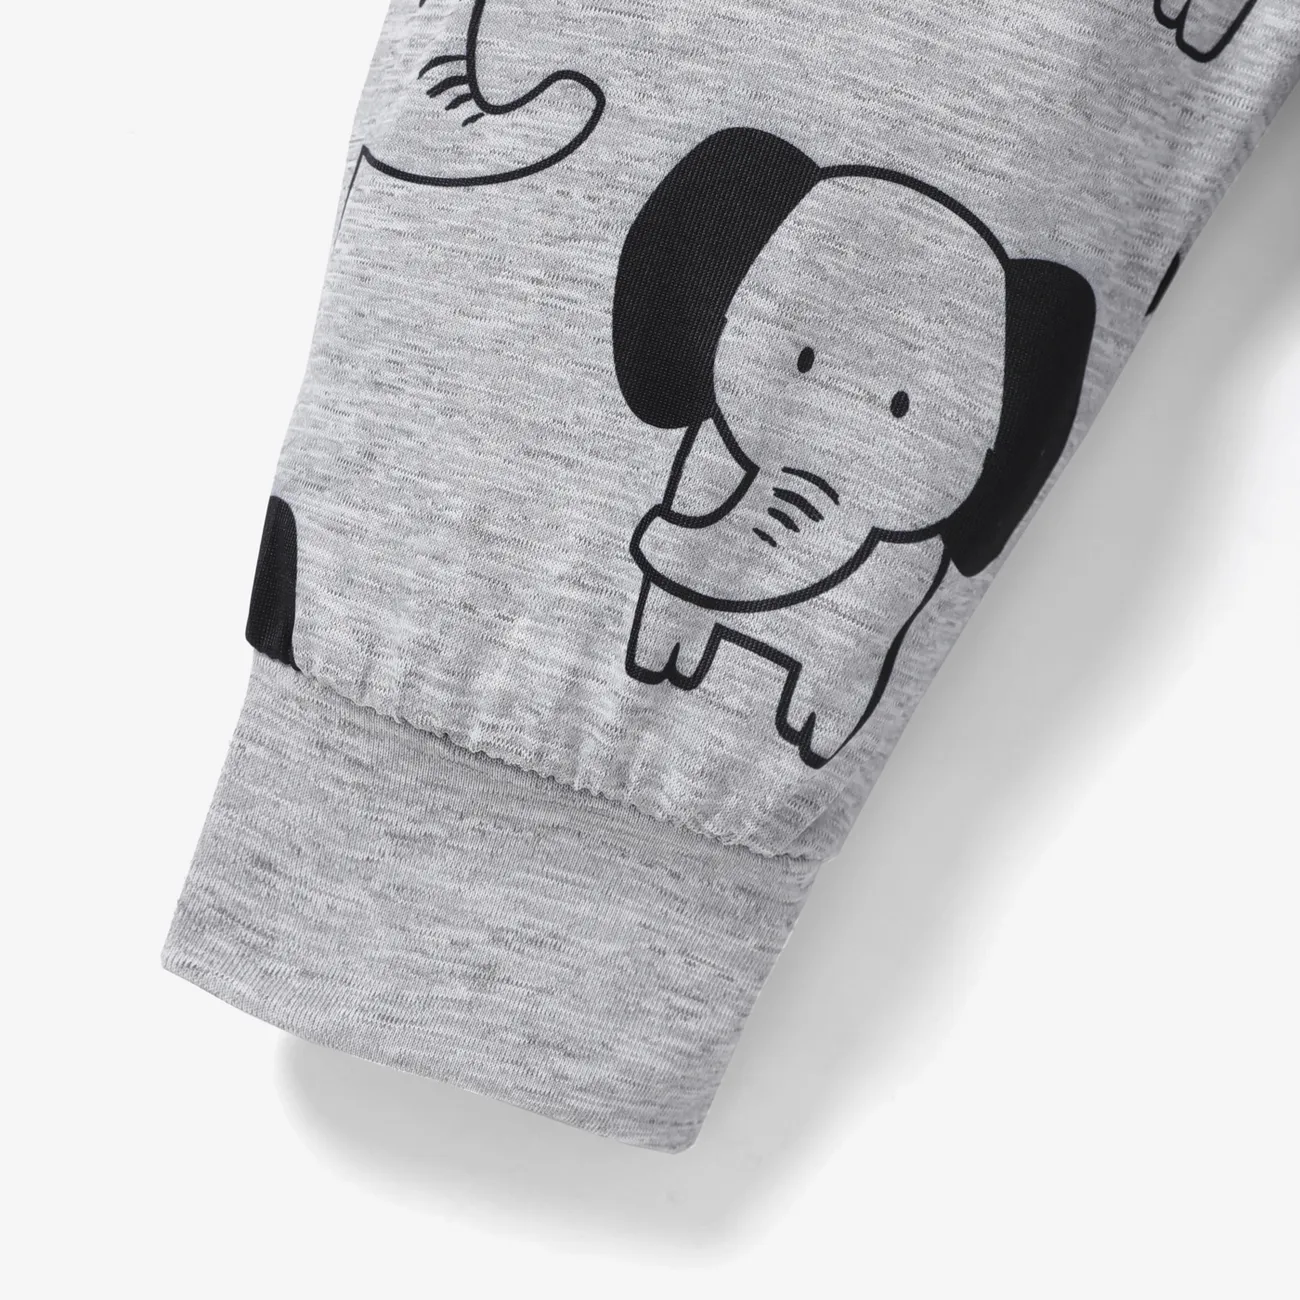 Baby Boy/Girl Allover Elephant Print Pants Grey big image 1